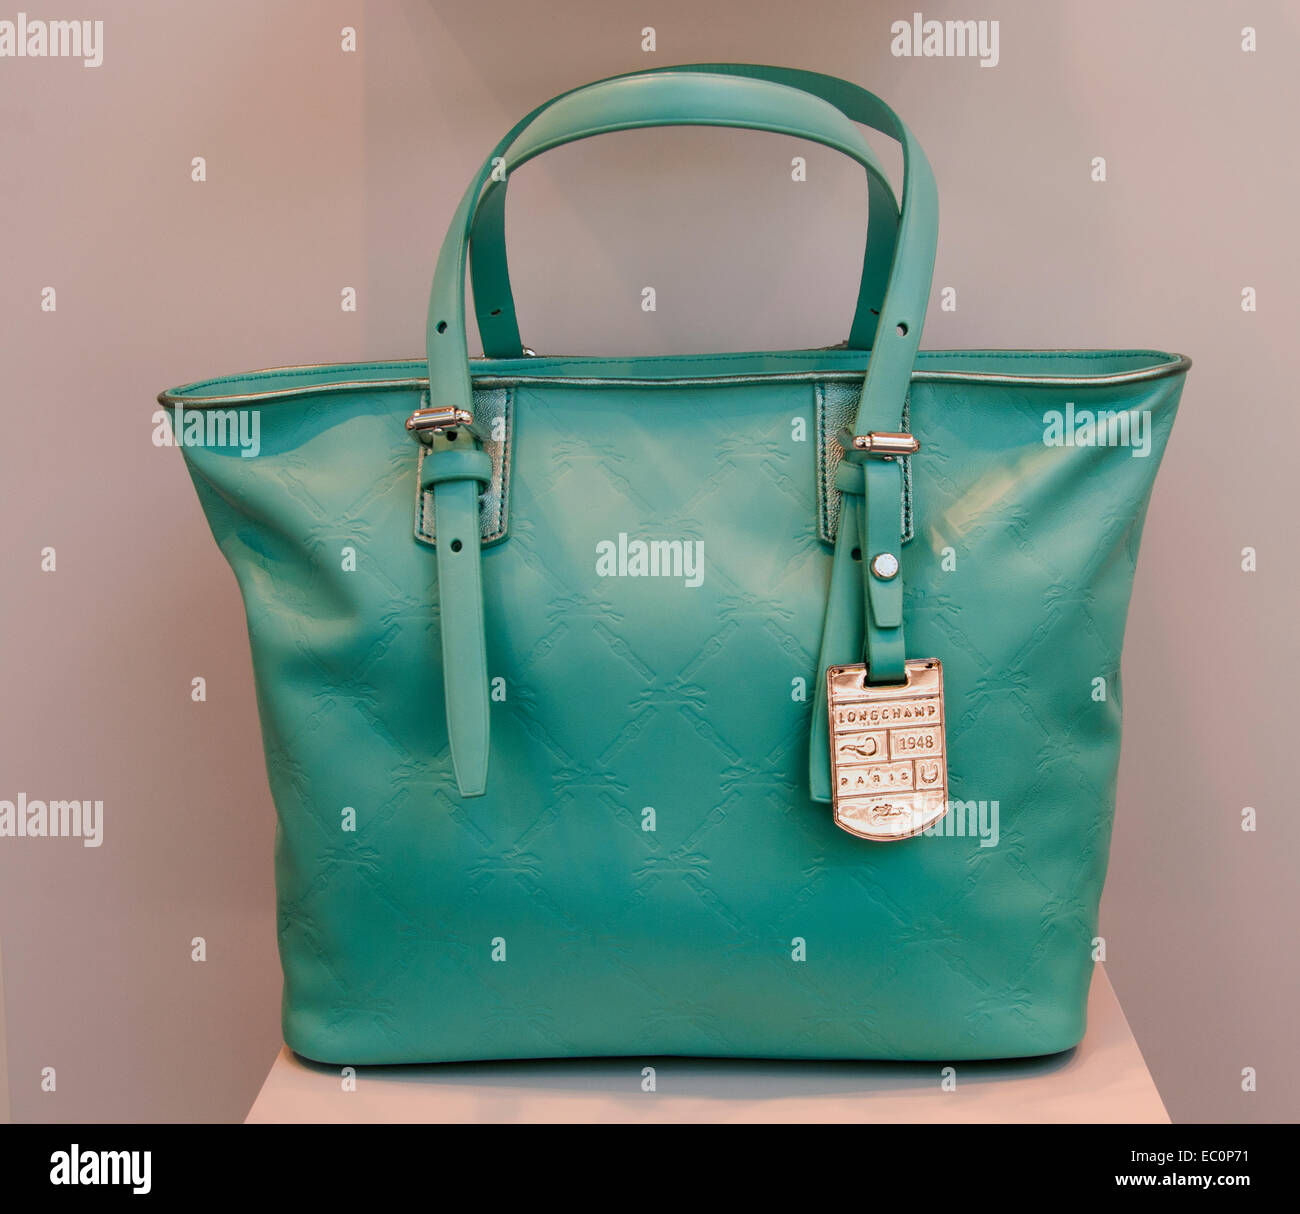 Longchamp bag hi-res stock photography and images - Alamy